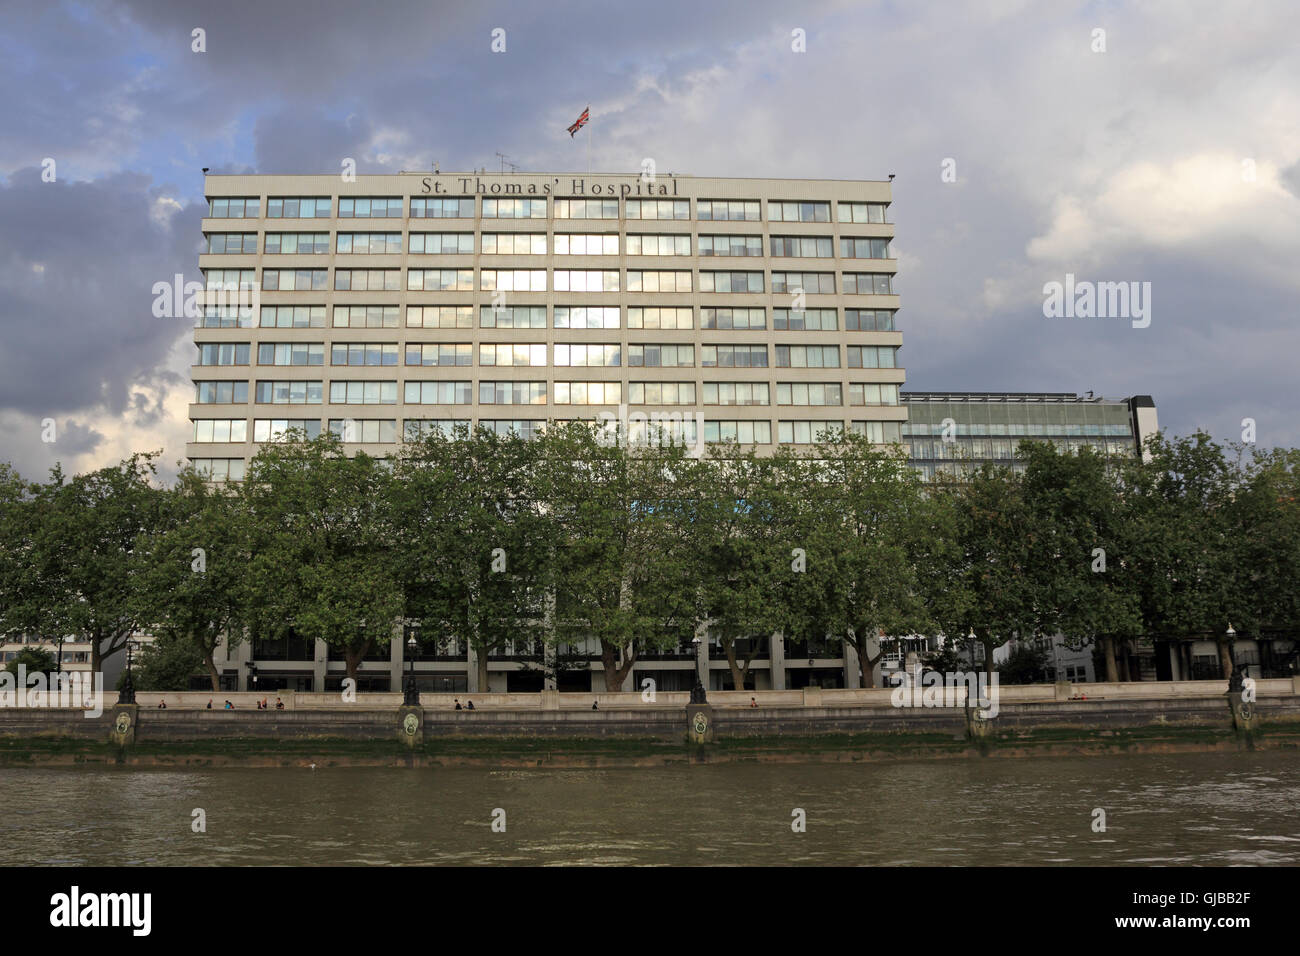 St Thomas' Hospital Westminster Bridge Road, London SE1 7EH Angleterre UK Banque D'Images